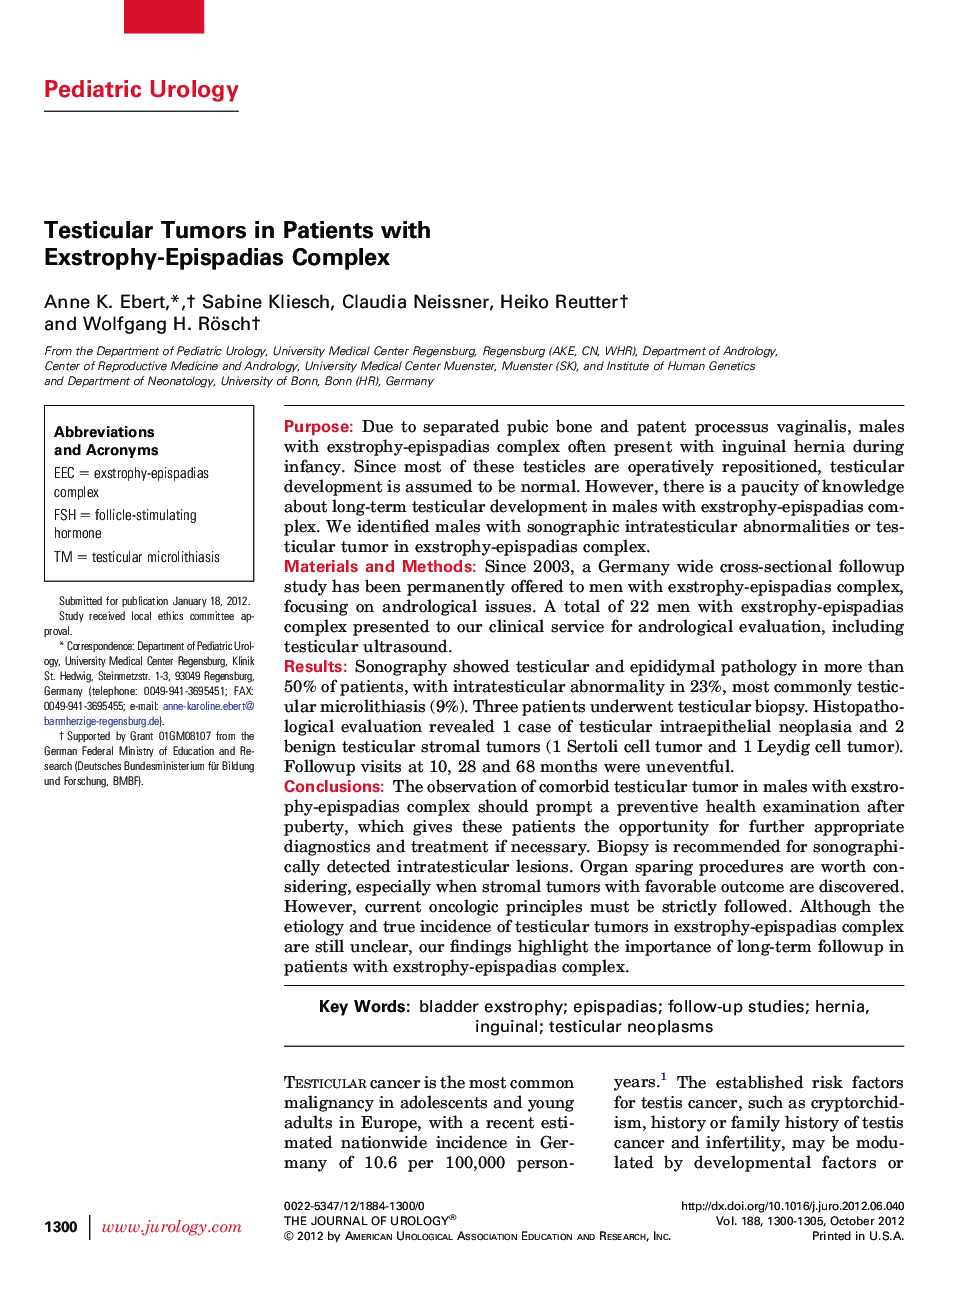 Testicular Tumors in Patients with Exstrophy-Epispadias Complex